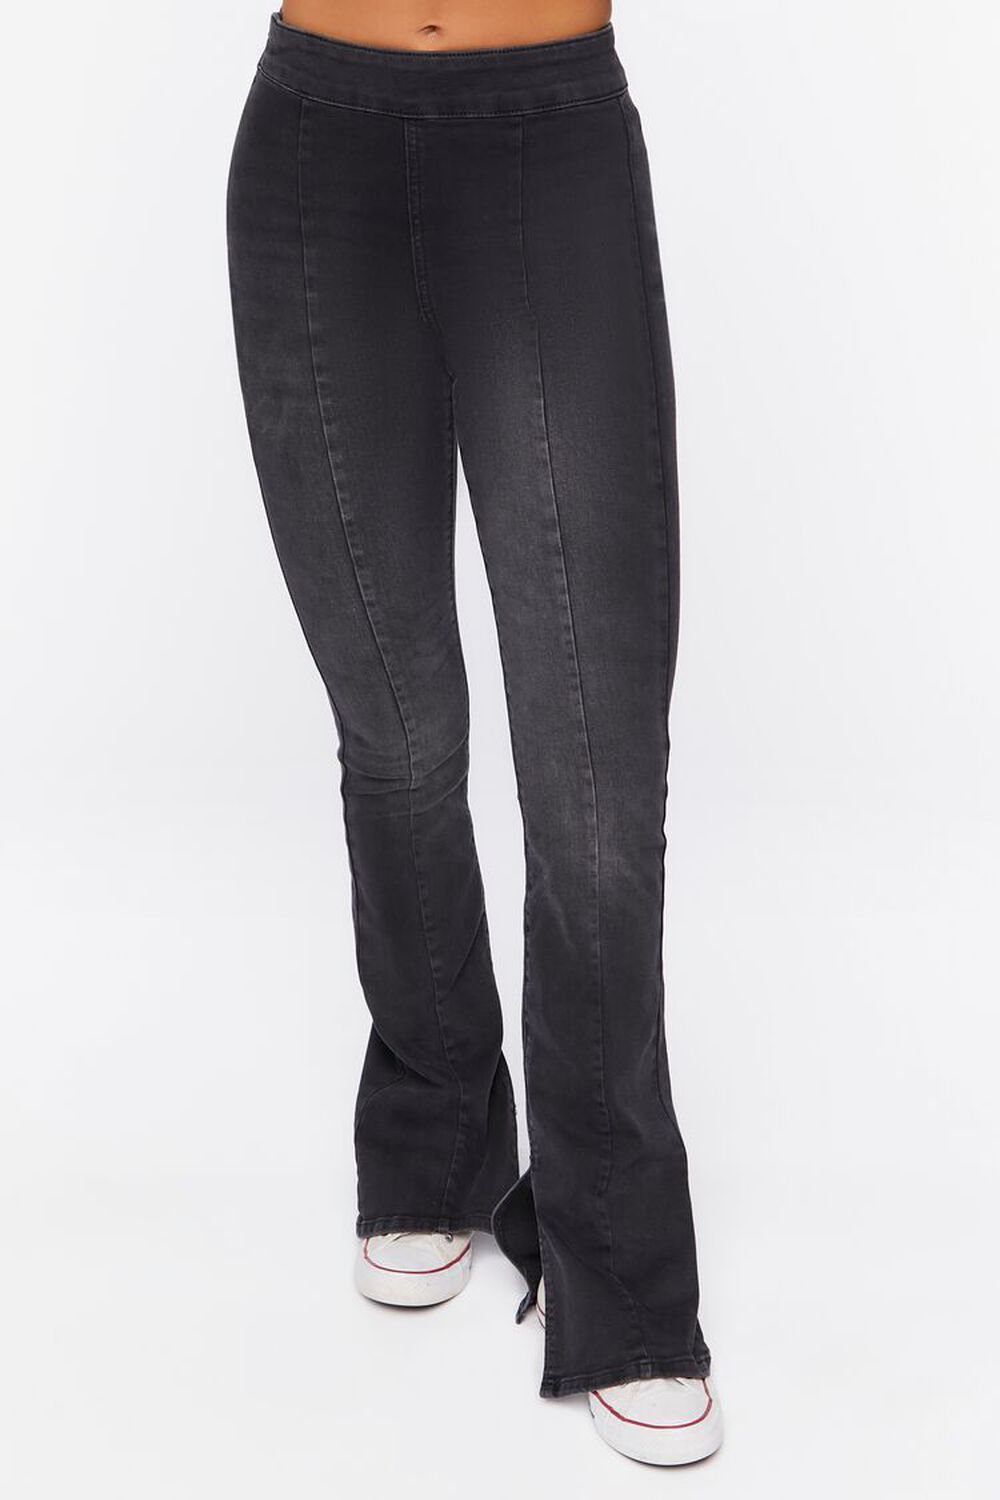 BLACK High-Rise Bootleg Split-Hem Jeans, image 1